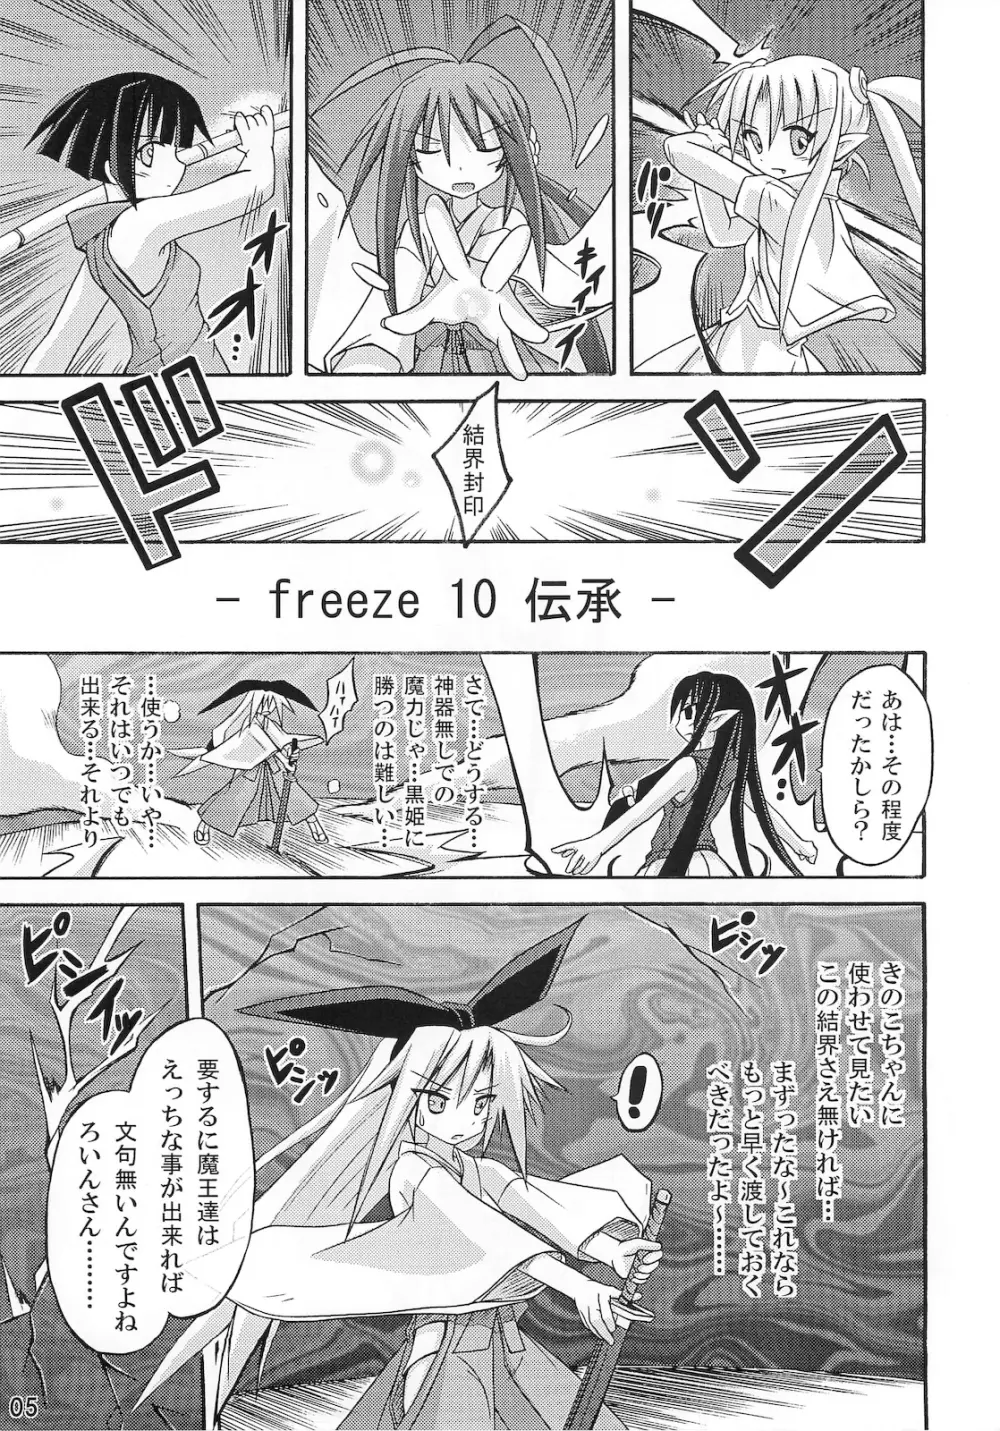 freeze 10 伝承 5ページ